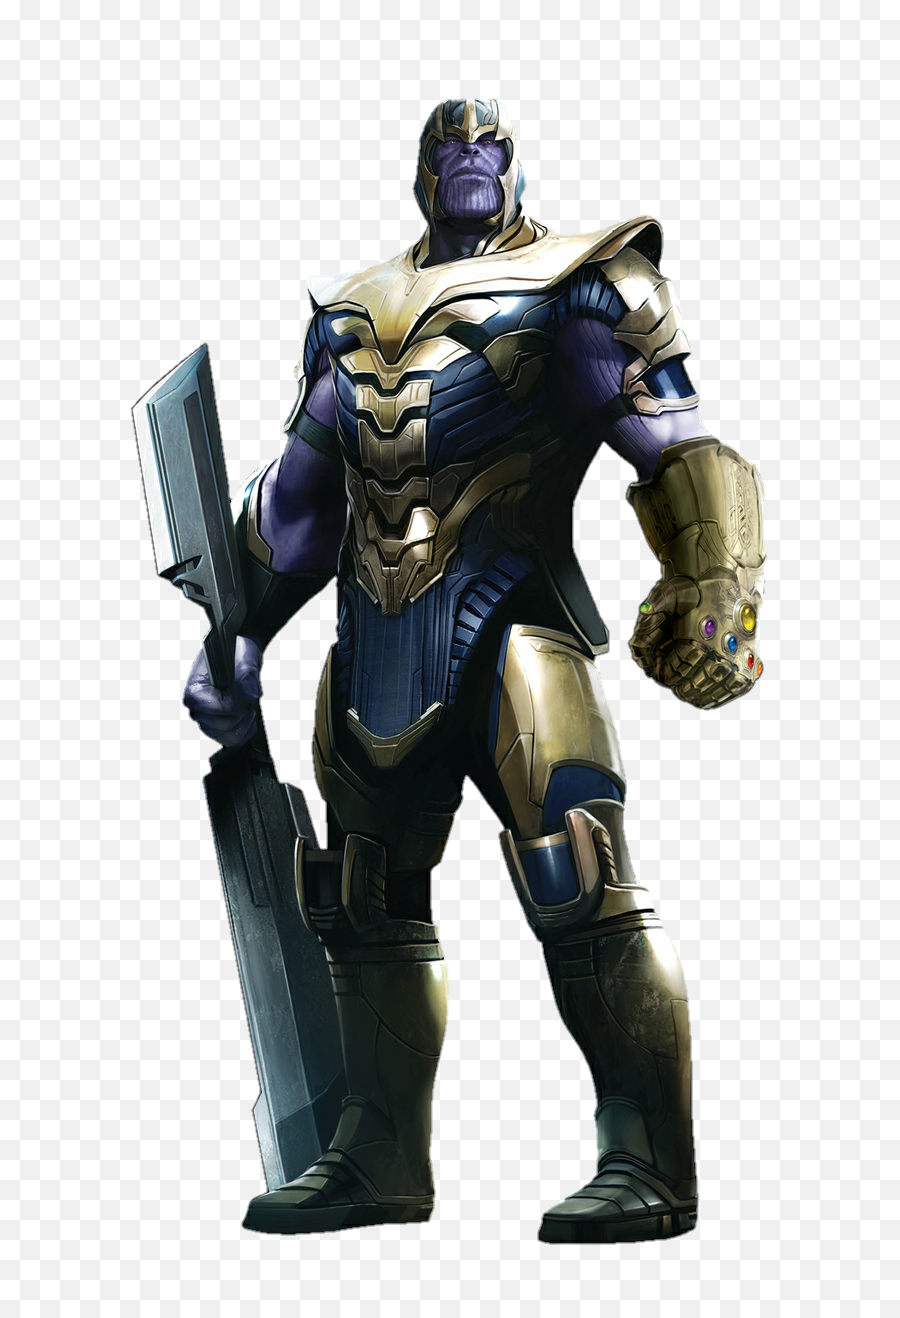 Thanos Png Transparent Image - Avengers 4 Concept Art Leak,Thanos Png